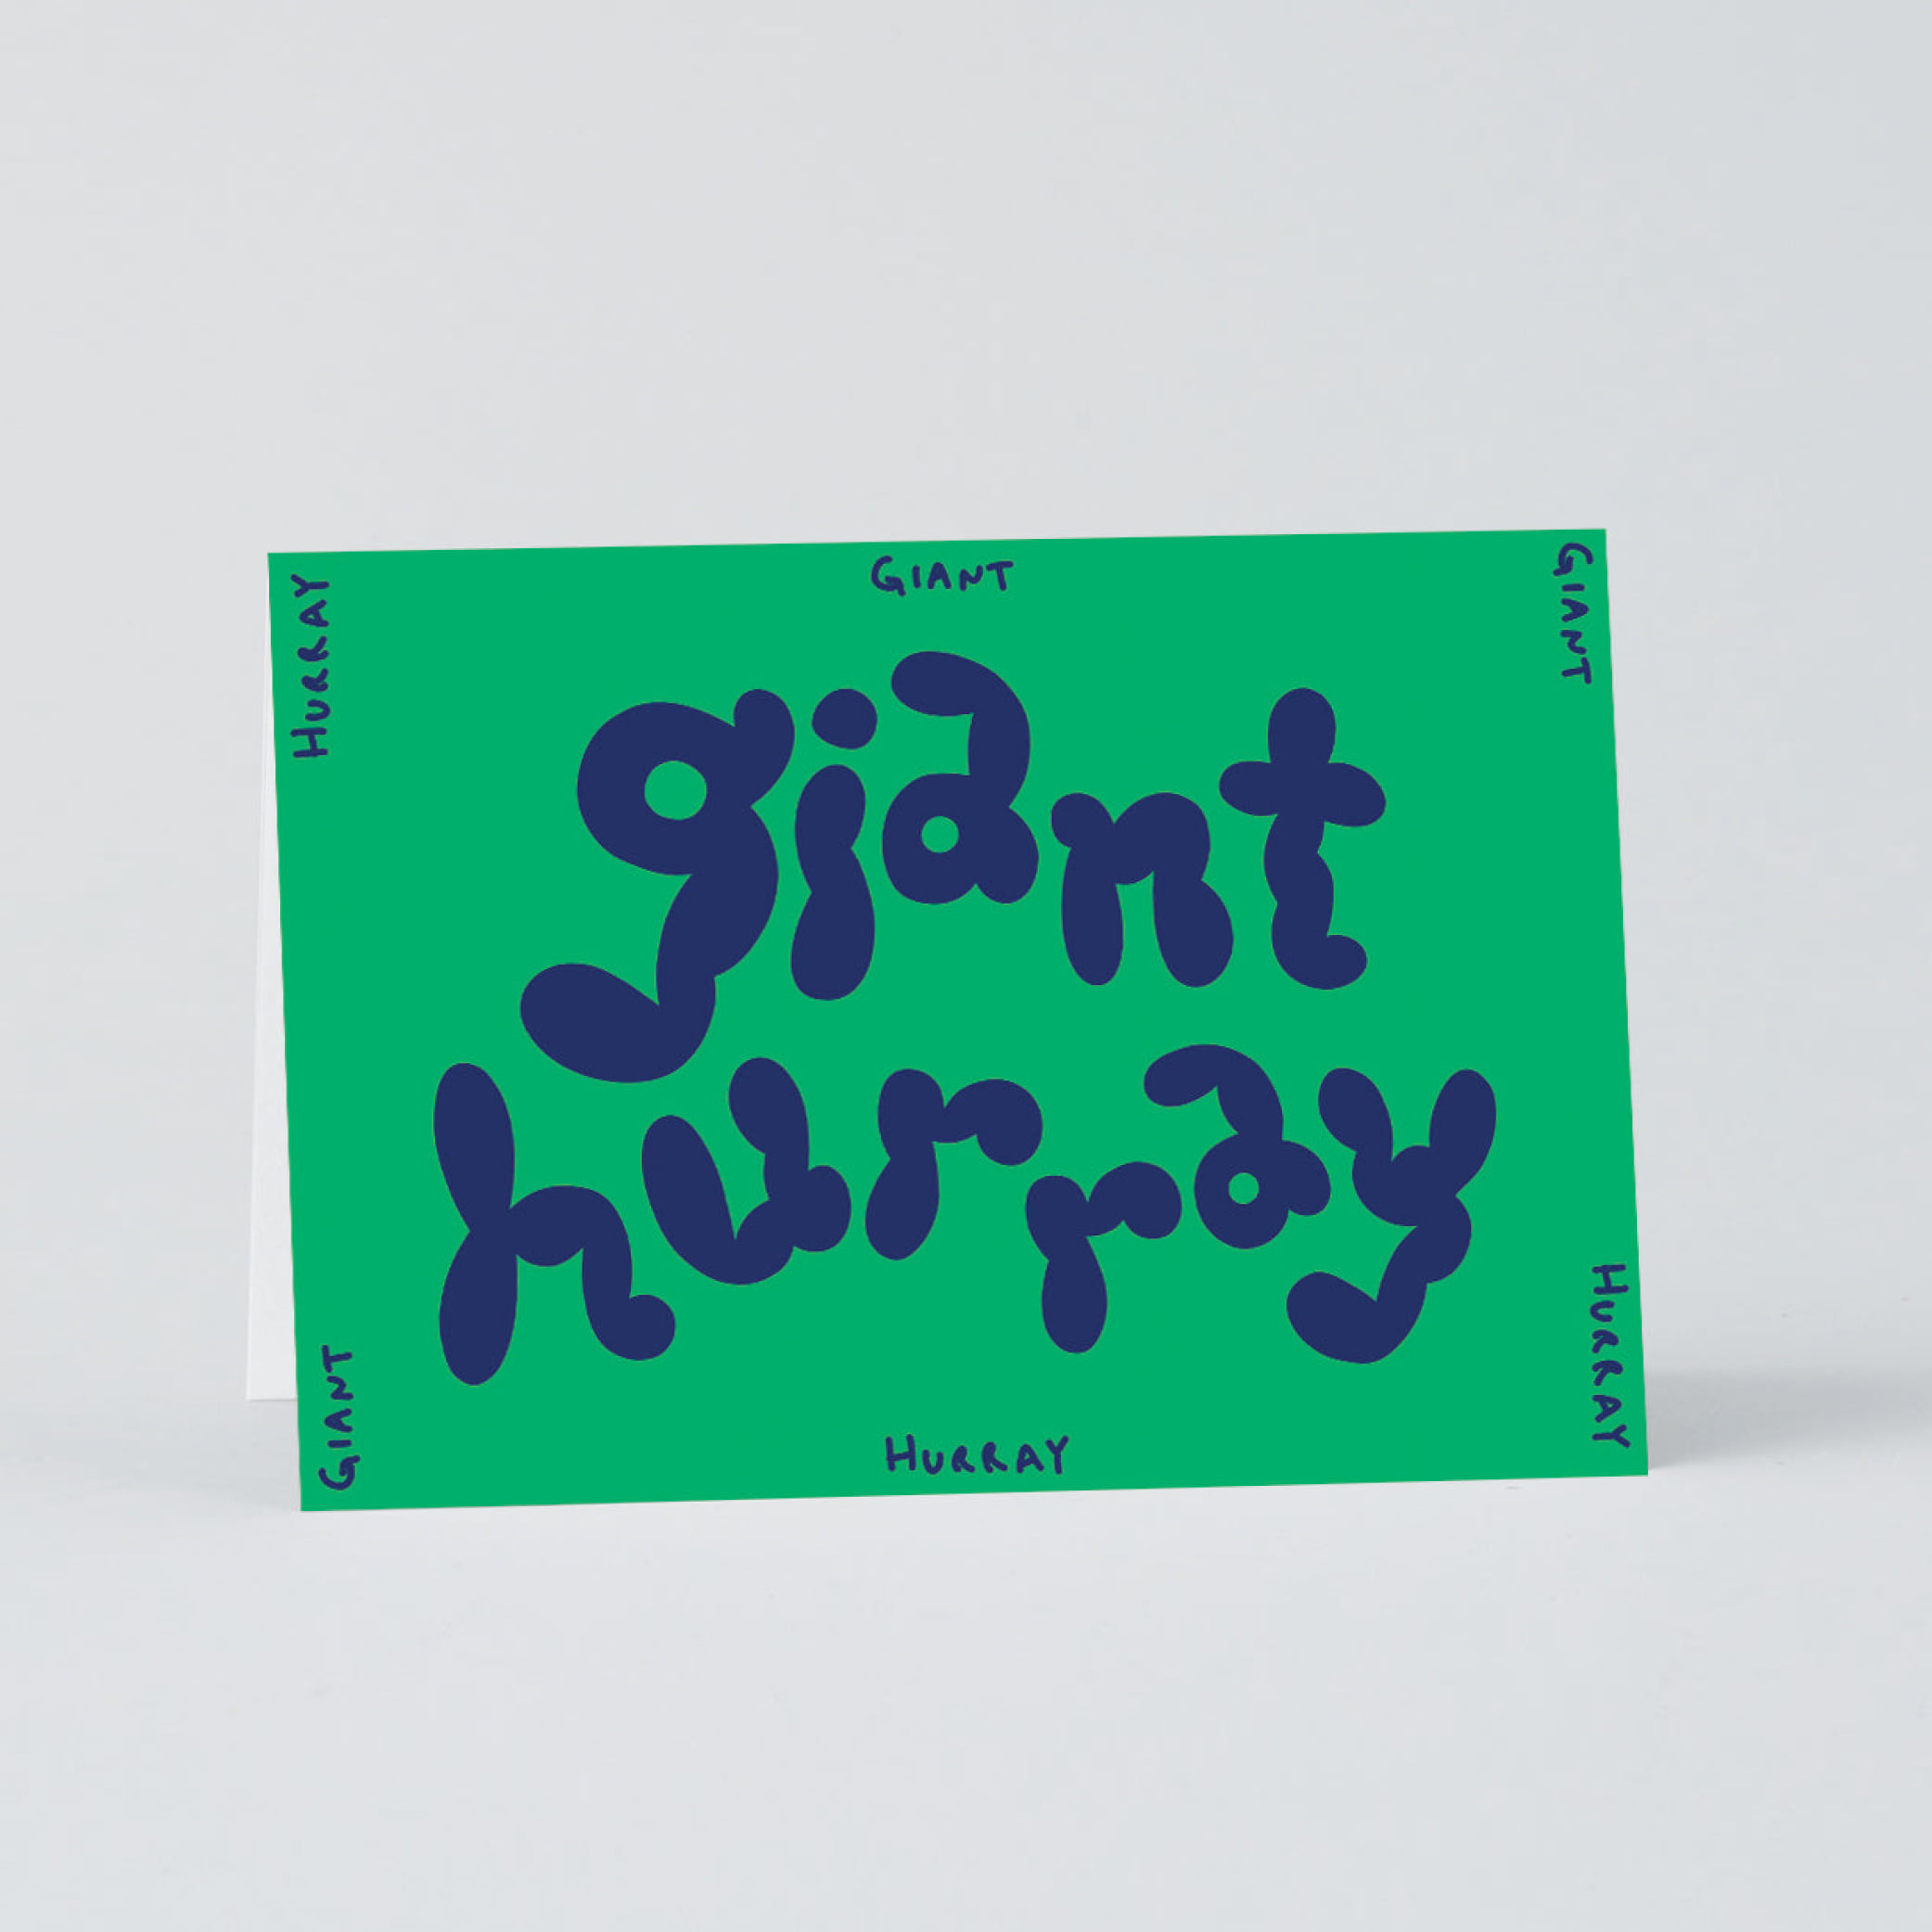 [WRAP] Giant Hurray Embossed Greetings Card